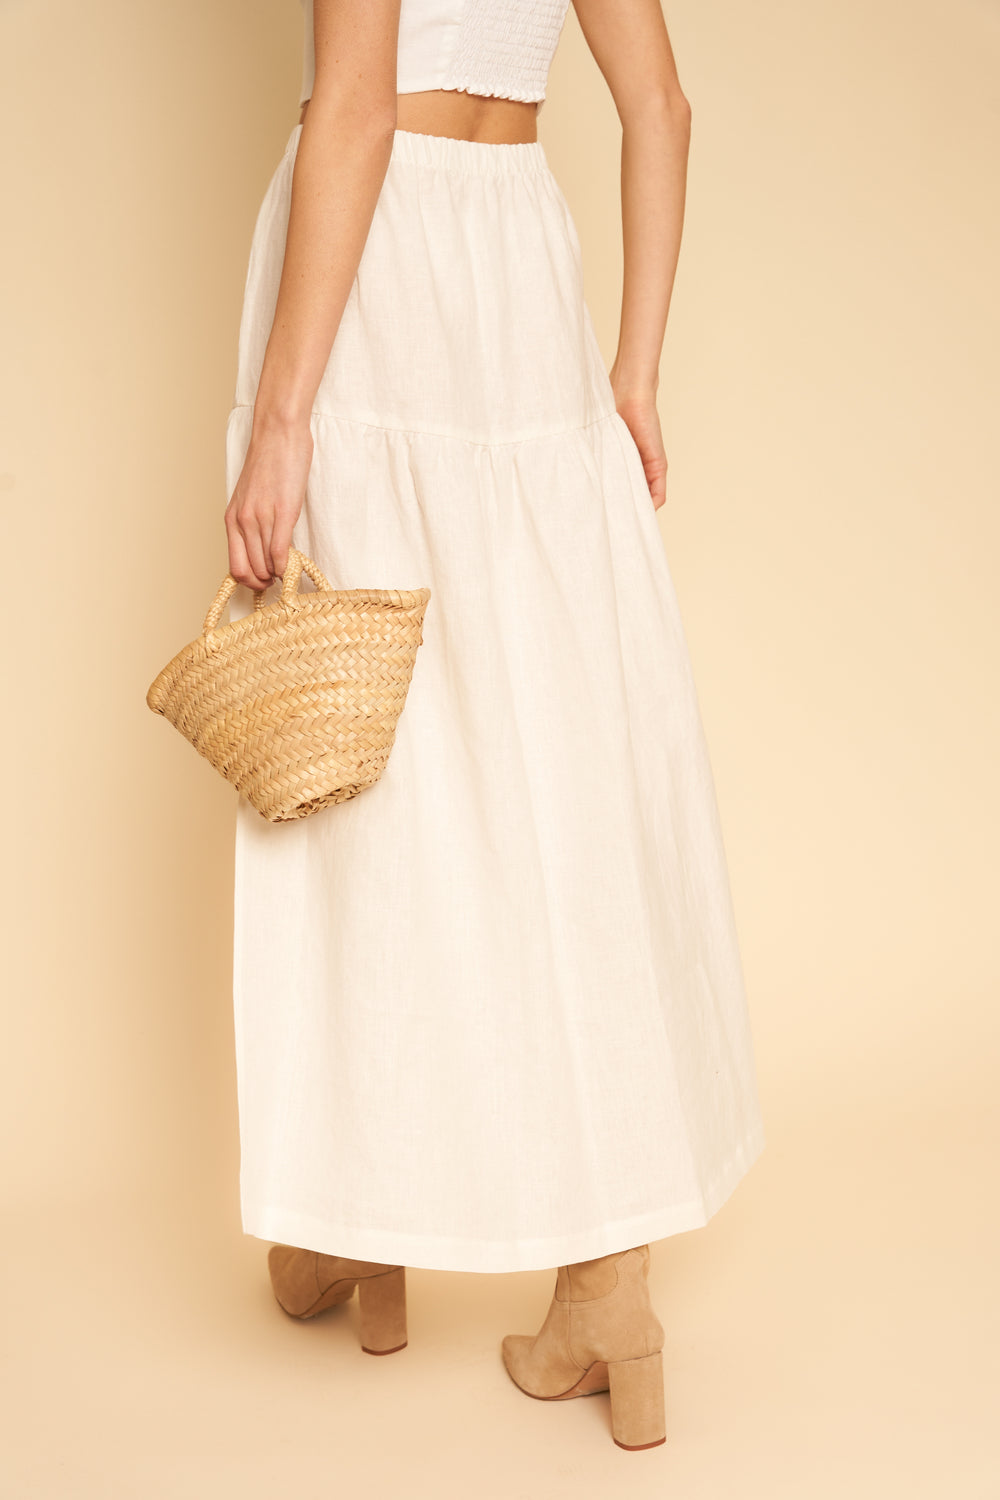 Millie Skirt/Dress in Coconut - Whimsy & Row